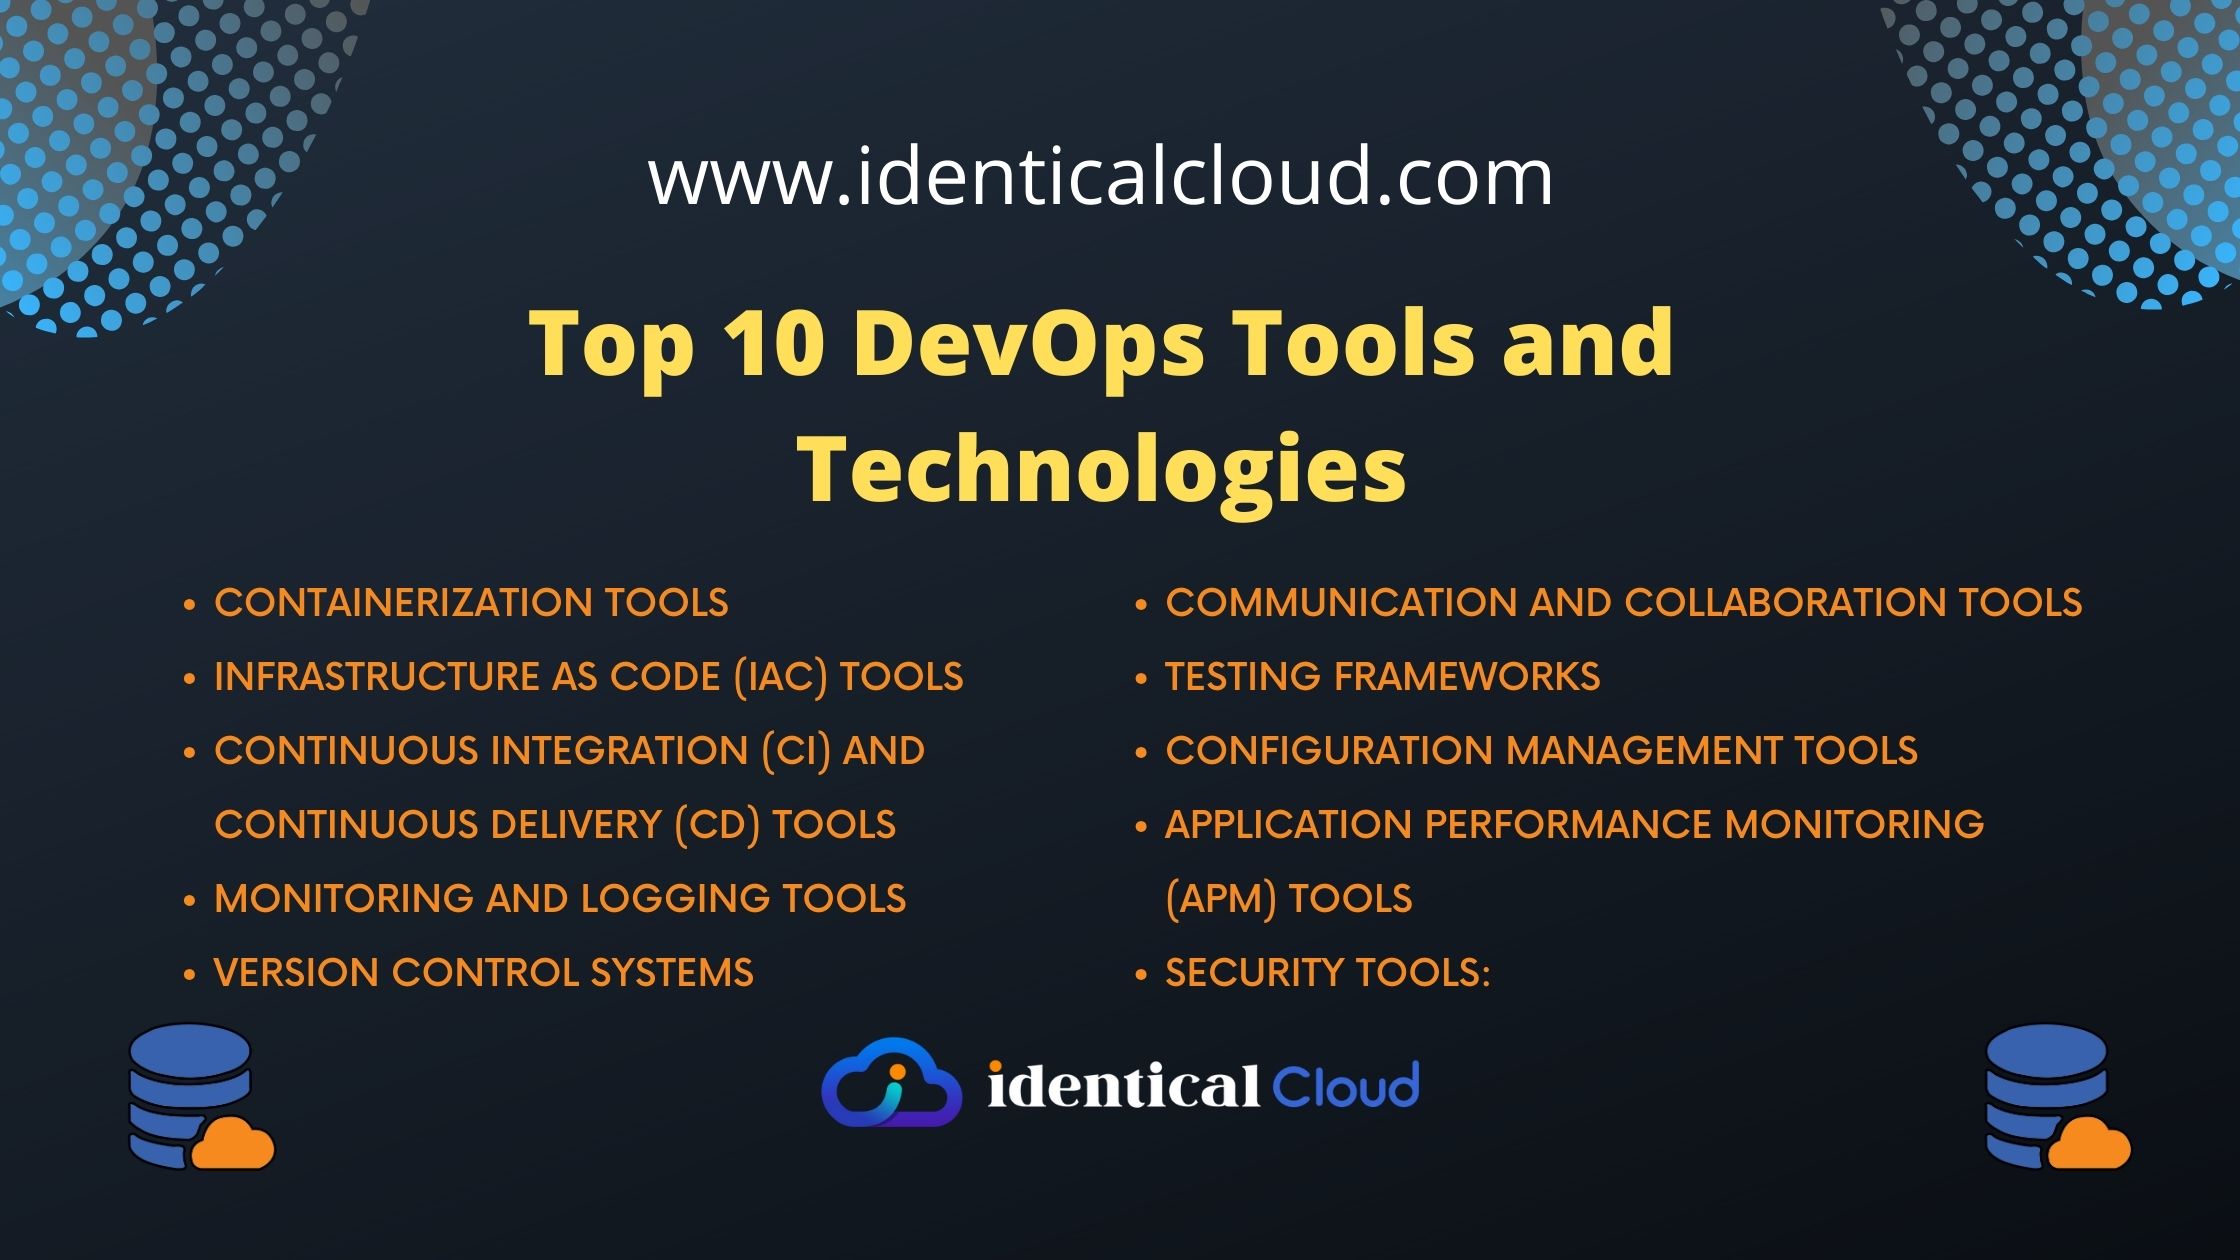 Top 10 DevOps Tools and Technologies - identicalcloud.com